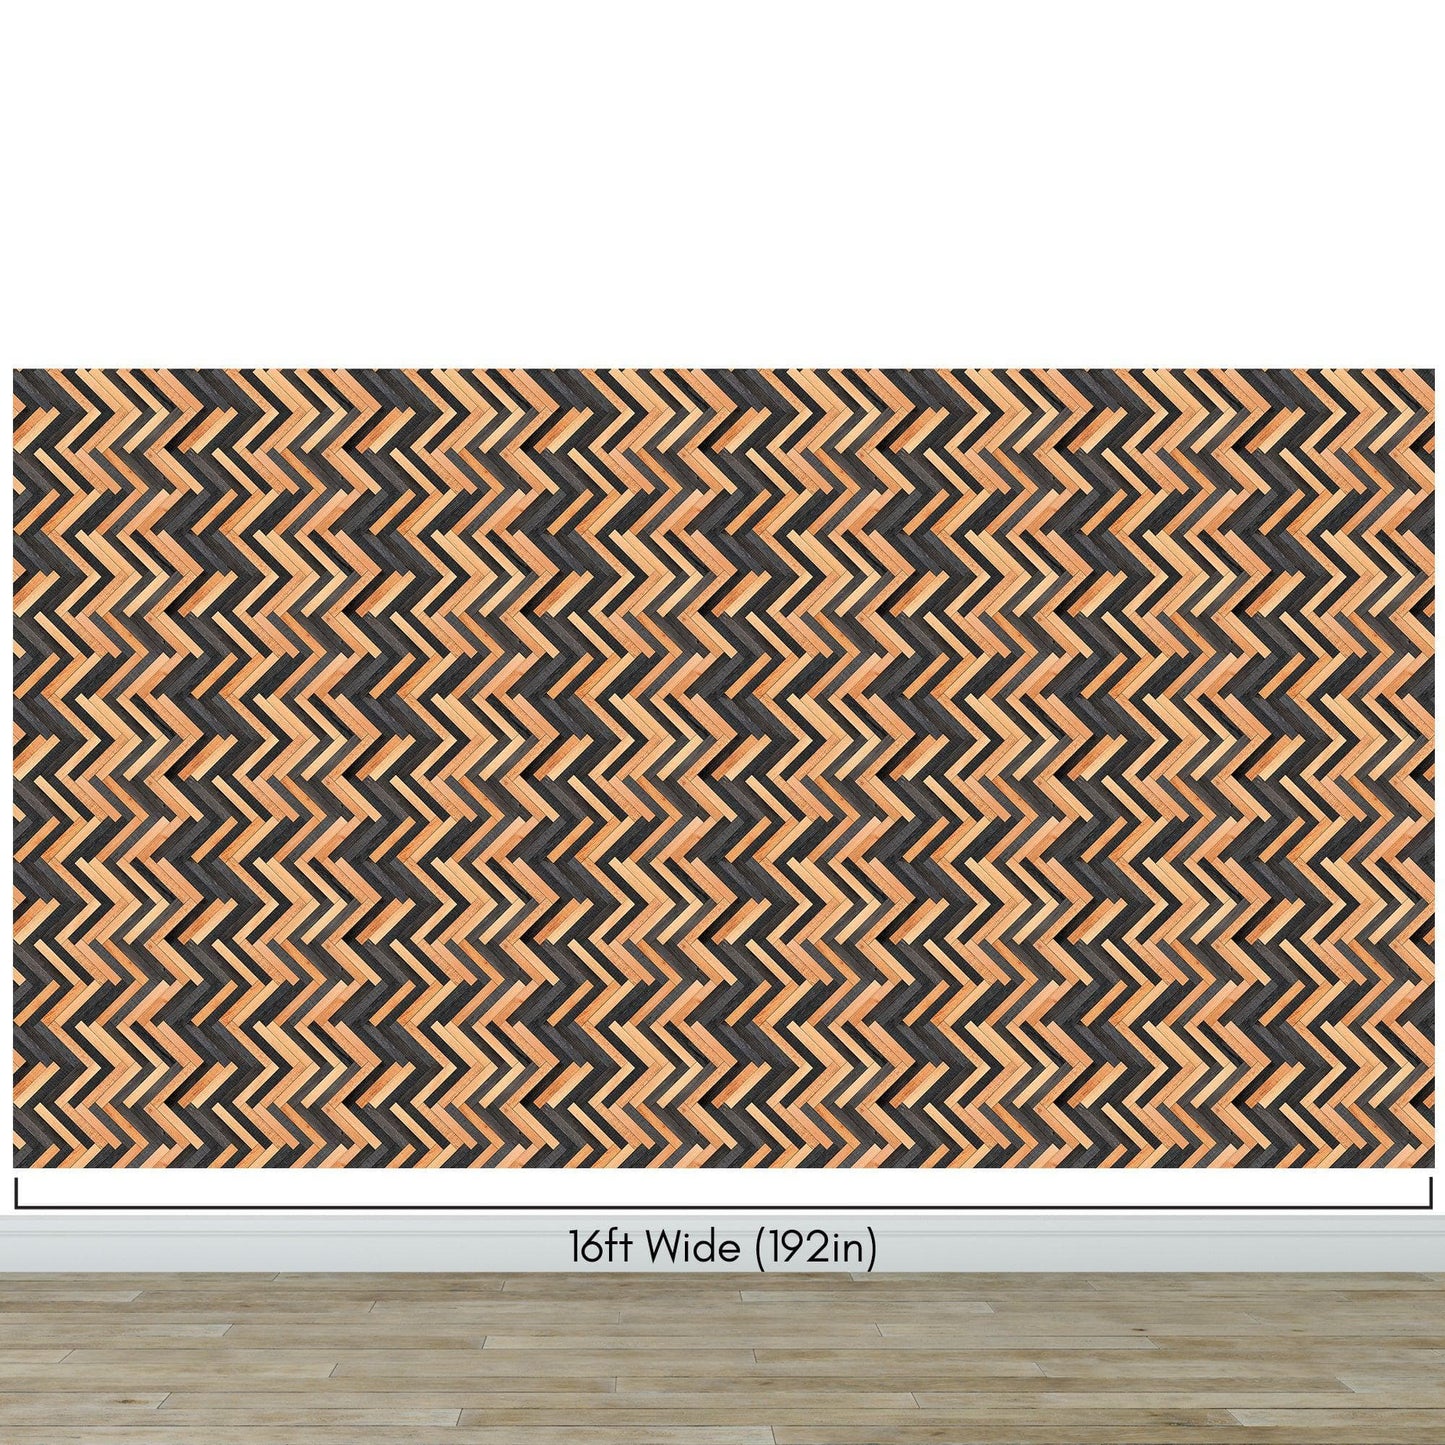 Modern Design Wooden Zigzag Panel Wallpaper Mural. #6736